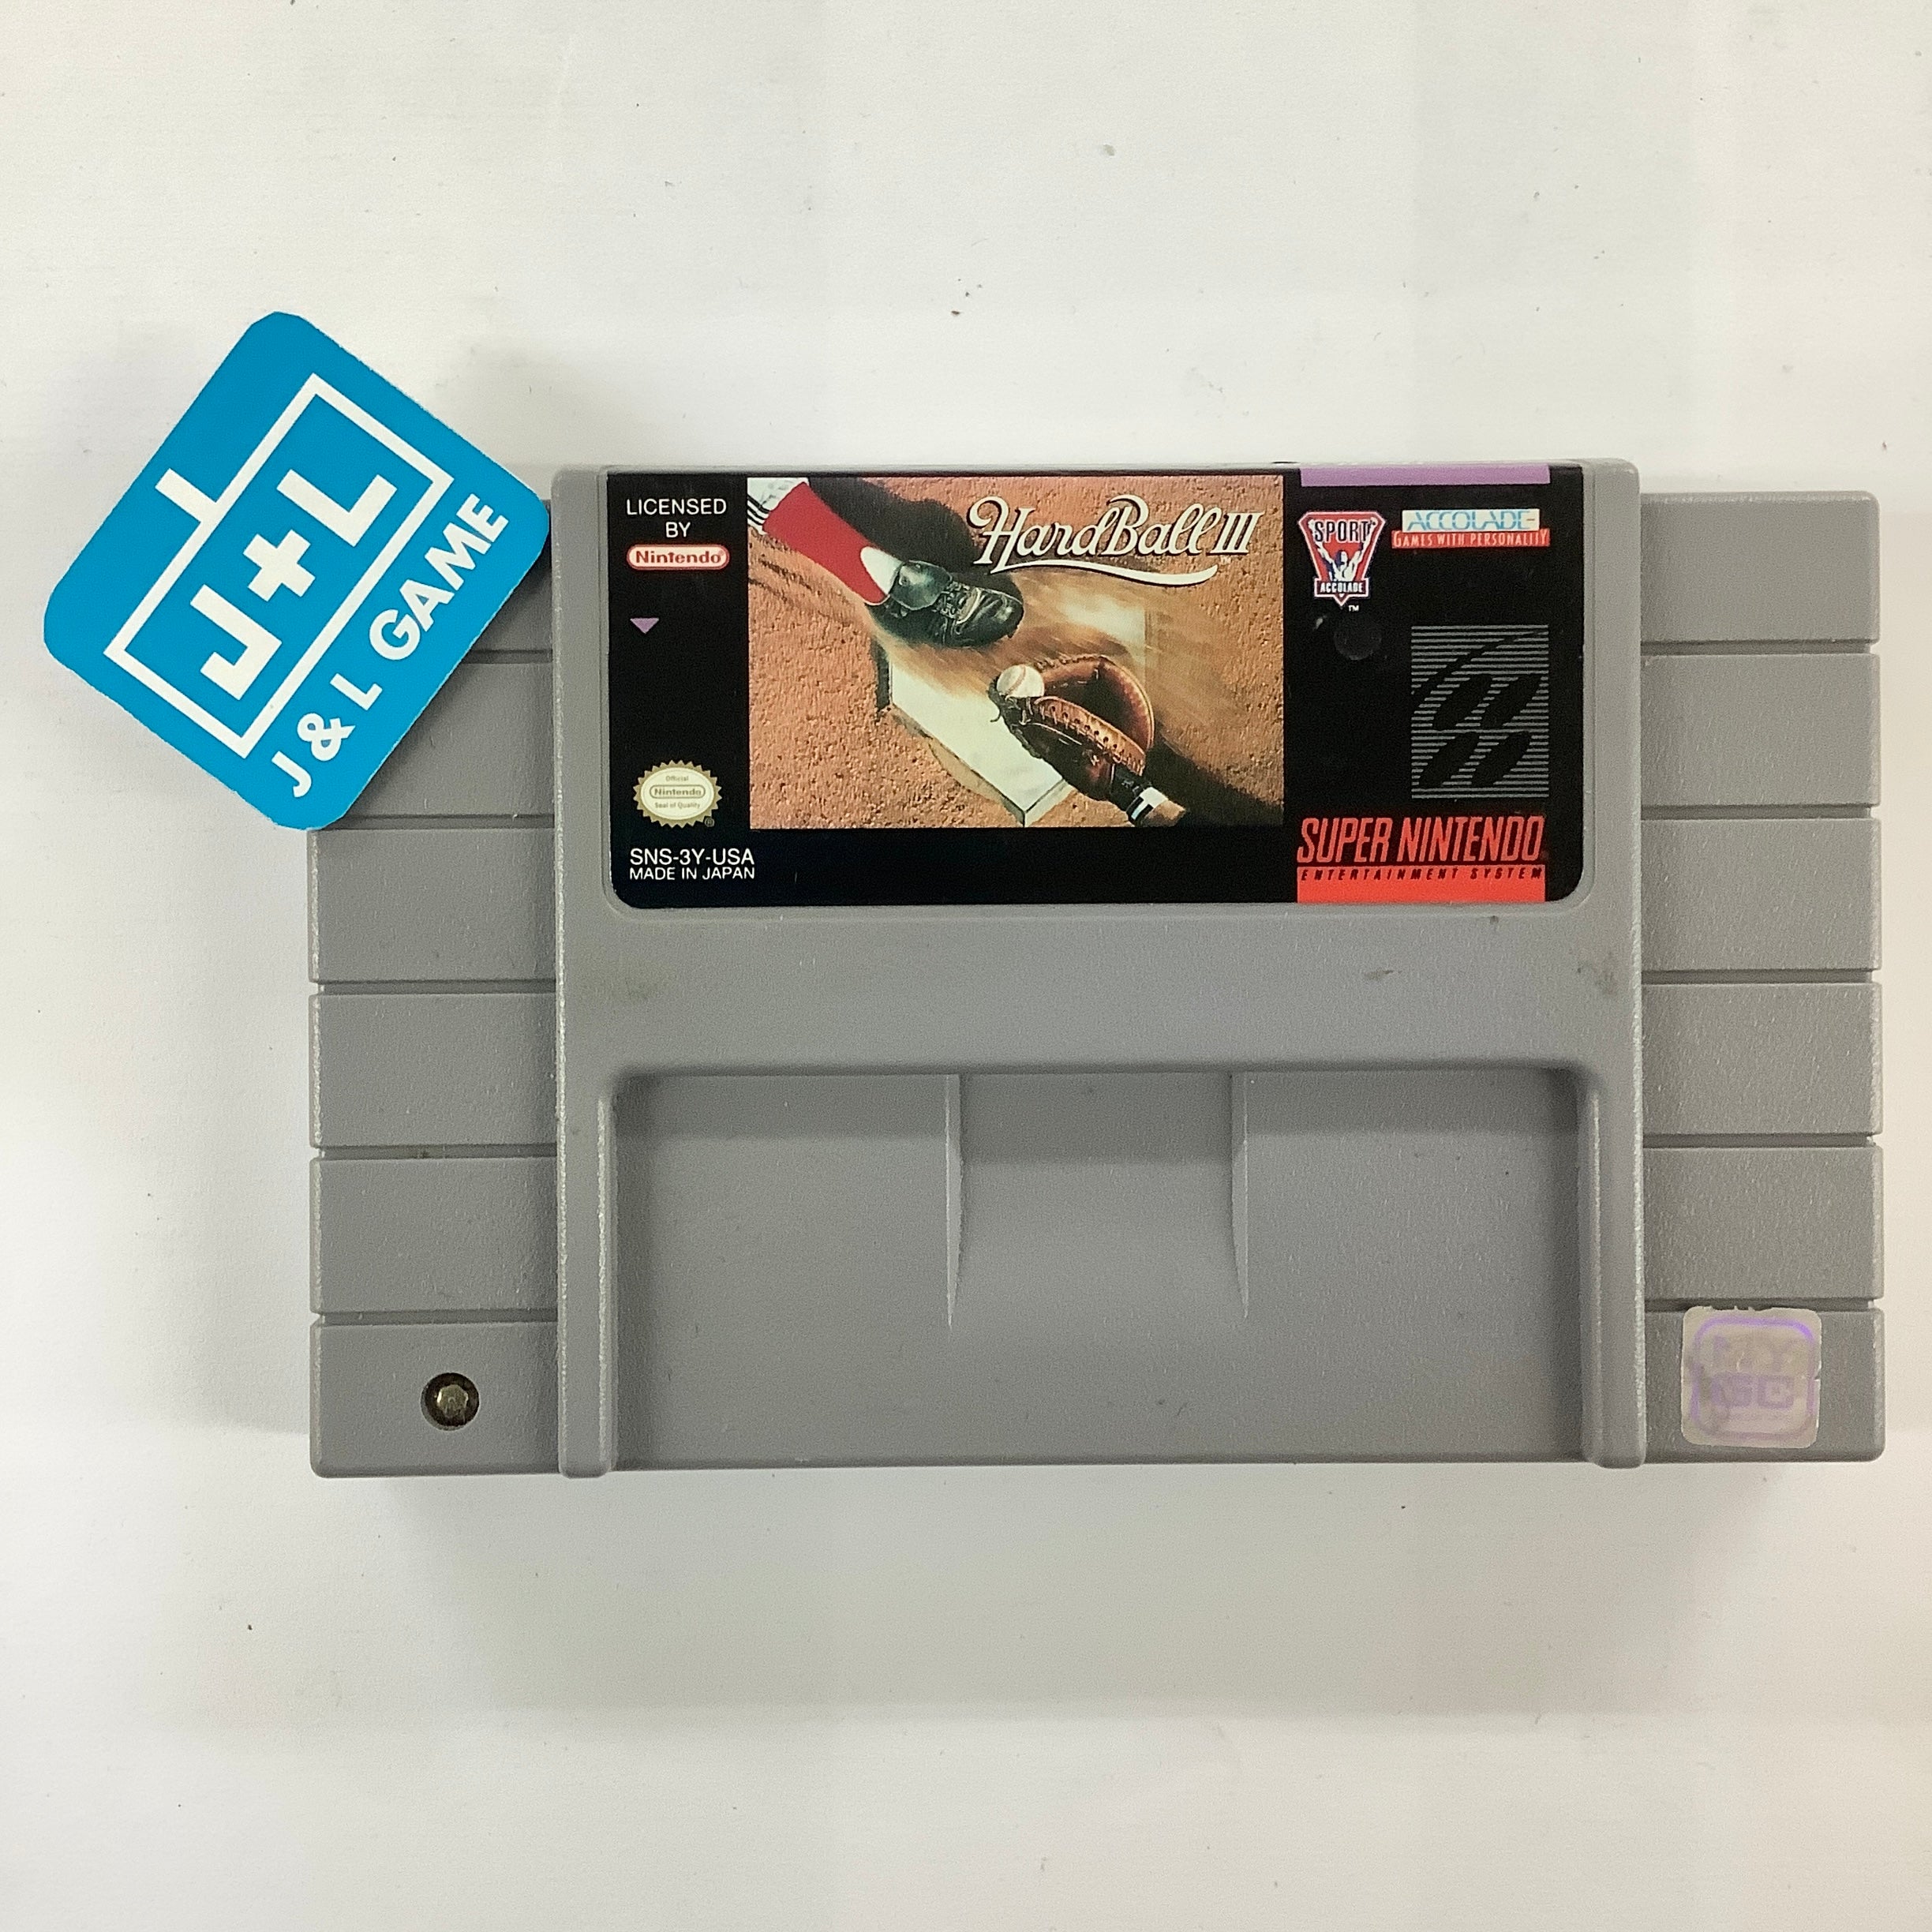 Hardball III - (SNES) Super Nintendo [Pre-Owned] Video Games Accolade   